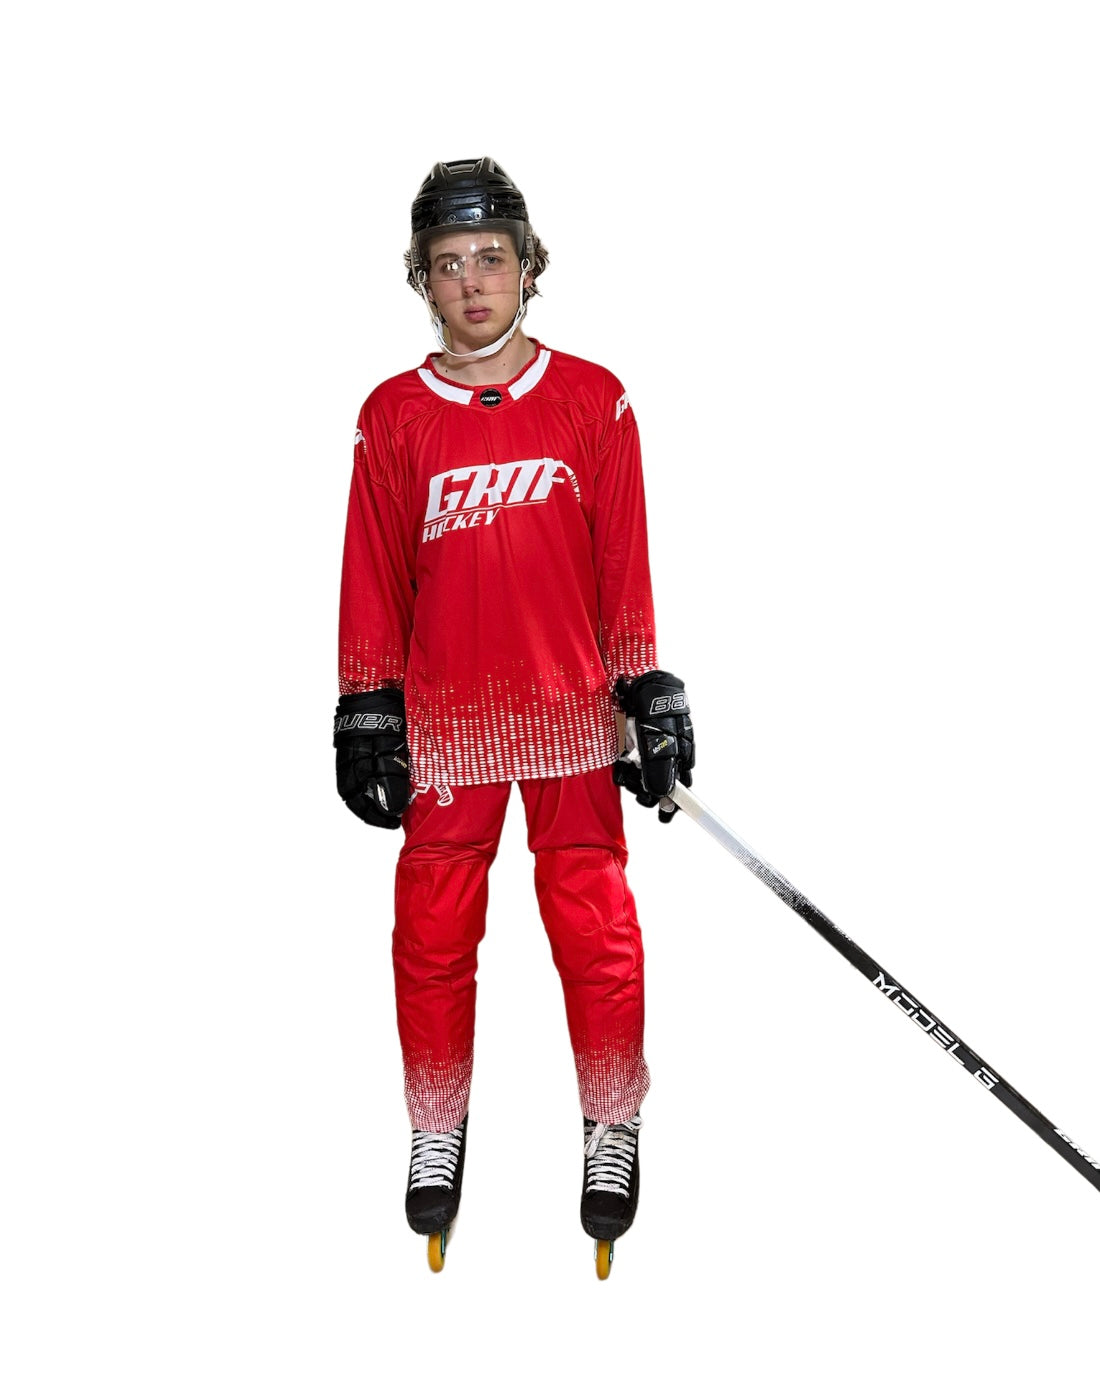 Red Roller Hockey Pants – Grif Hockey